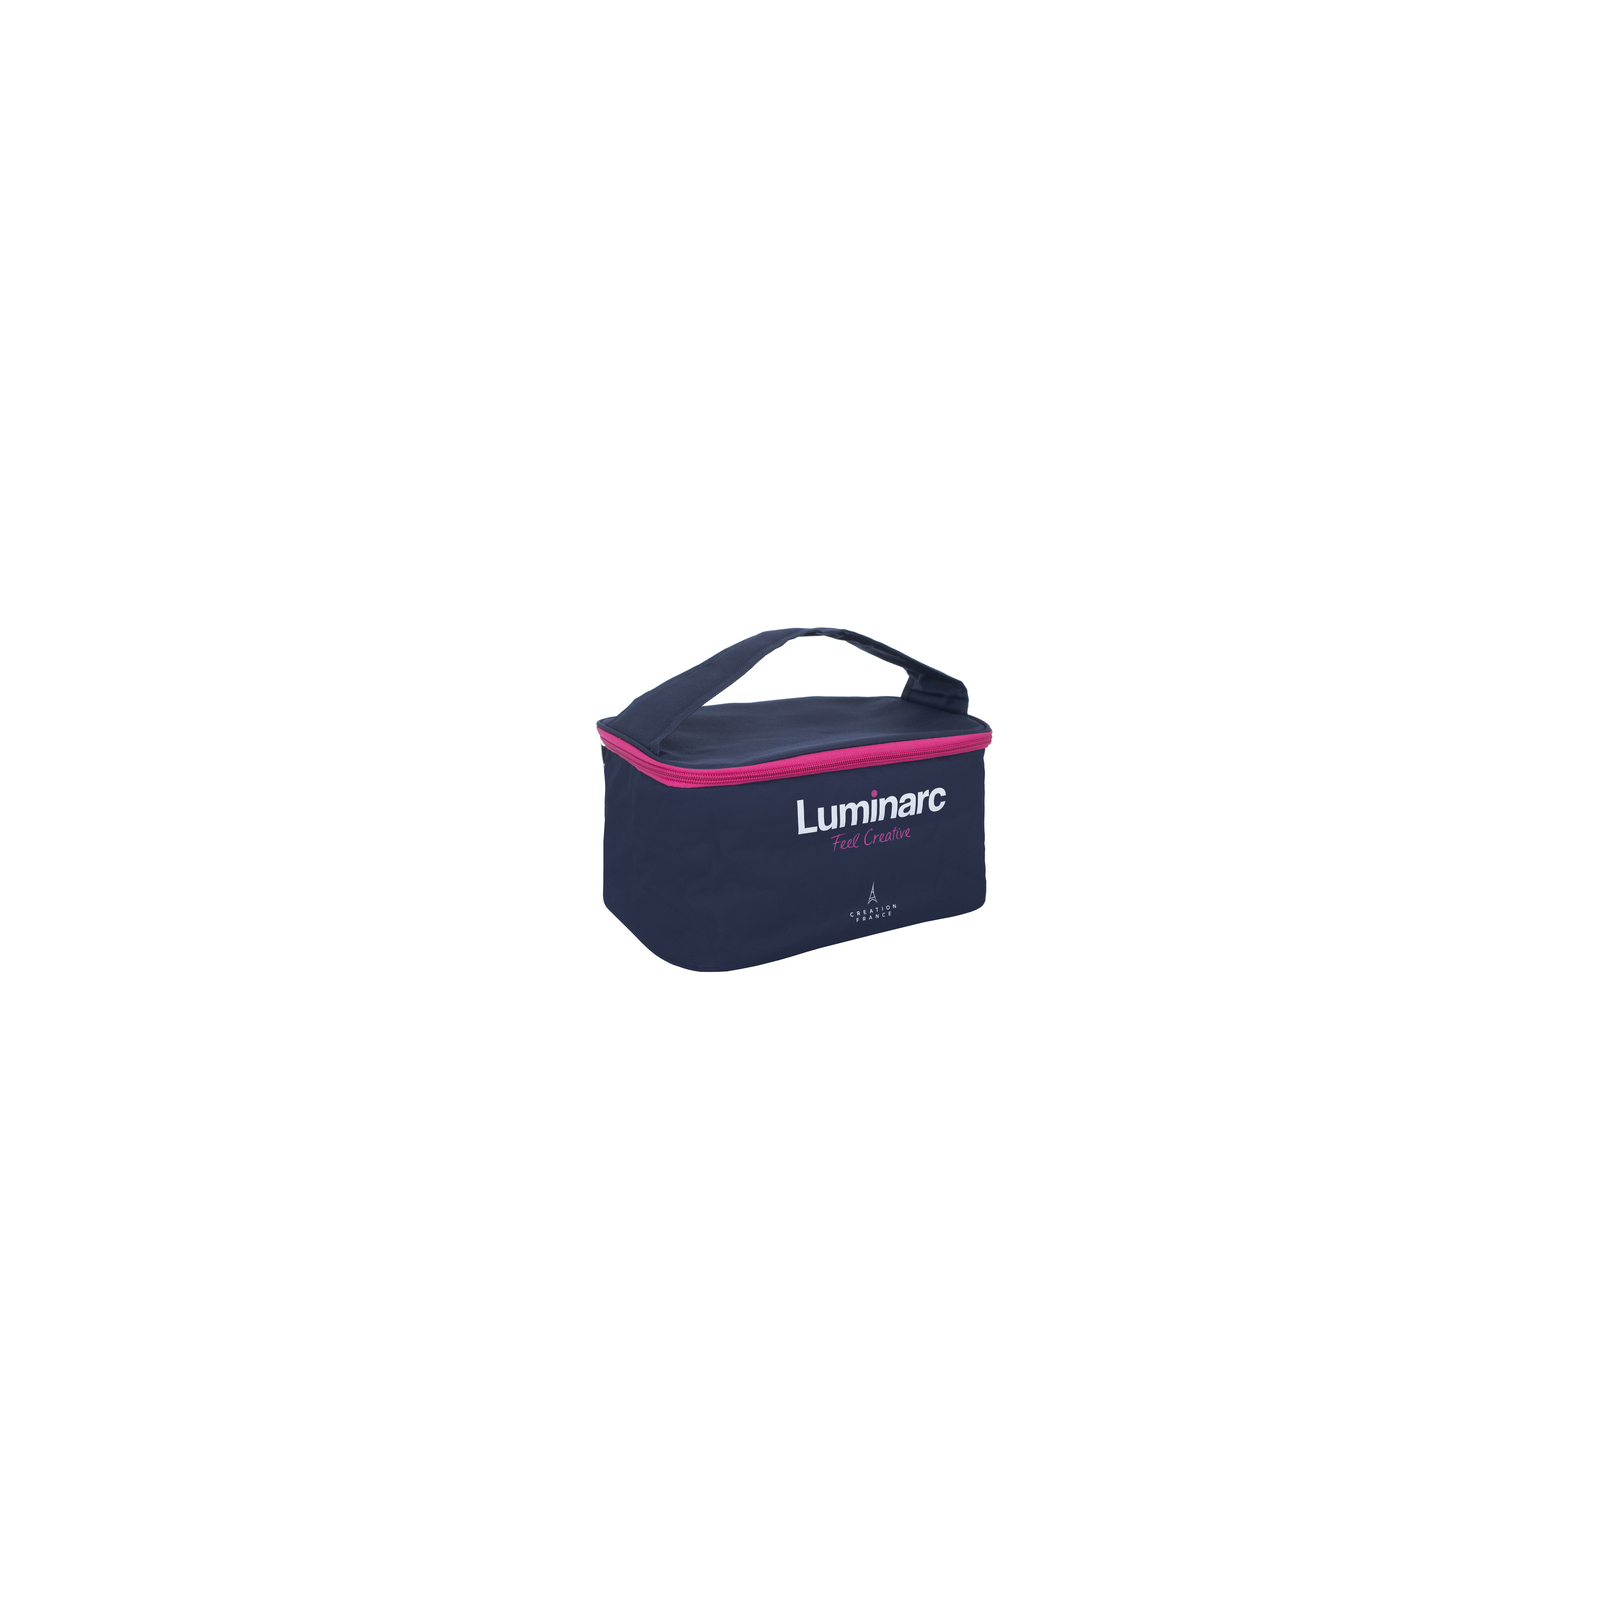 Харчовий контейнер Luminarc Pure Box Active набор 3шт 2х380мл/820мл/ + сумка (P8002) зображення 2